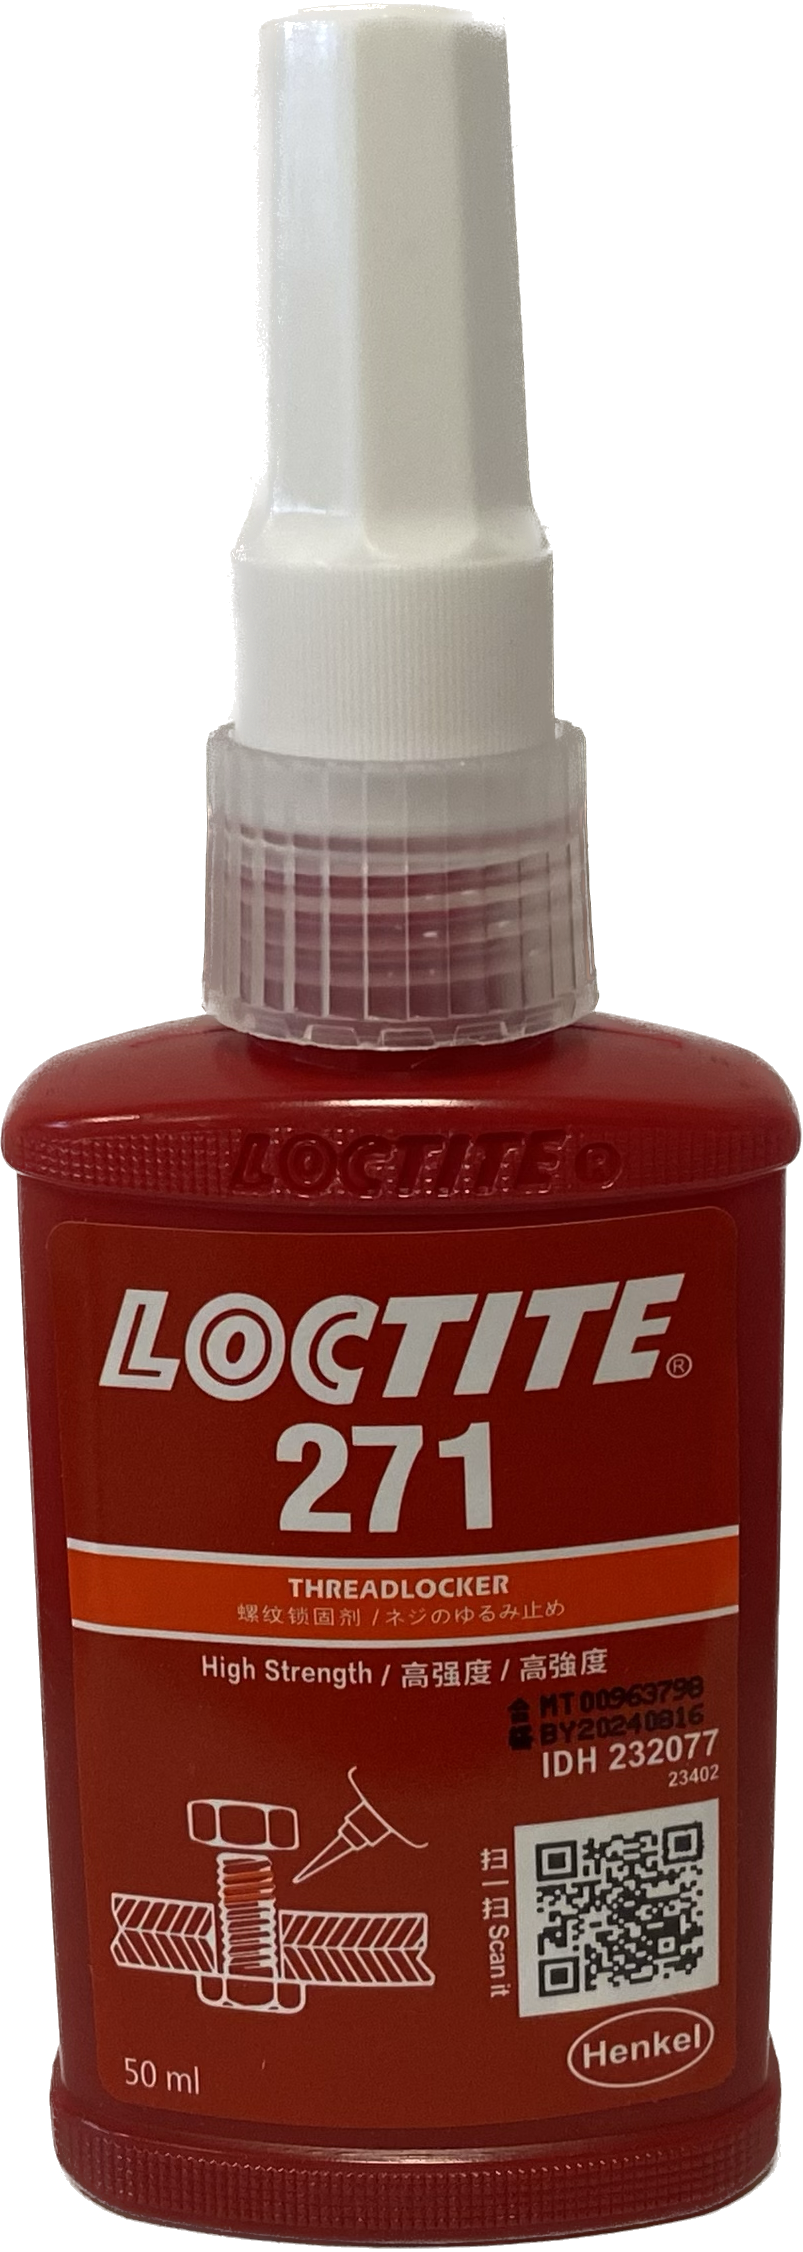 Loctite 271 High Strength Red Thread Locker 50ml